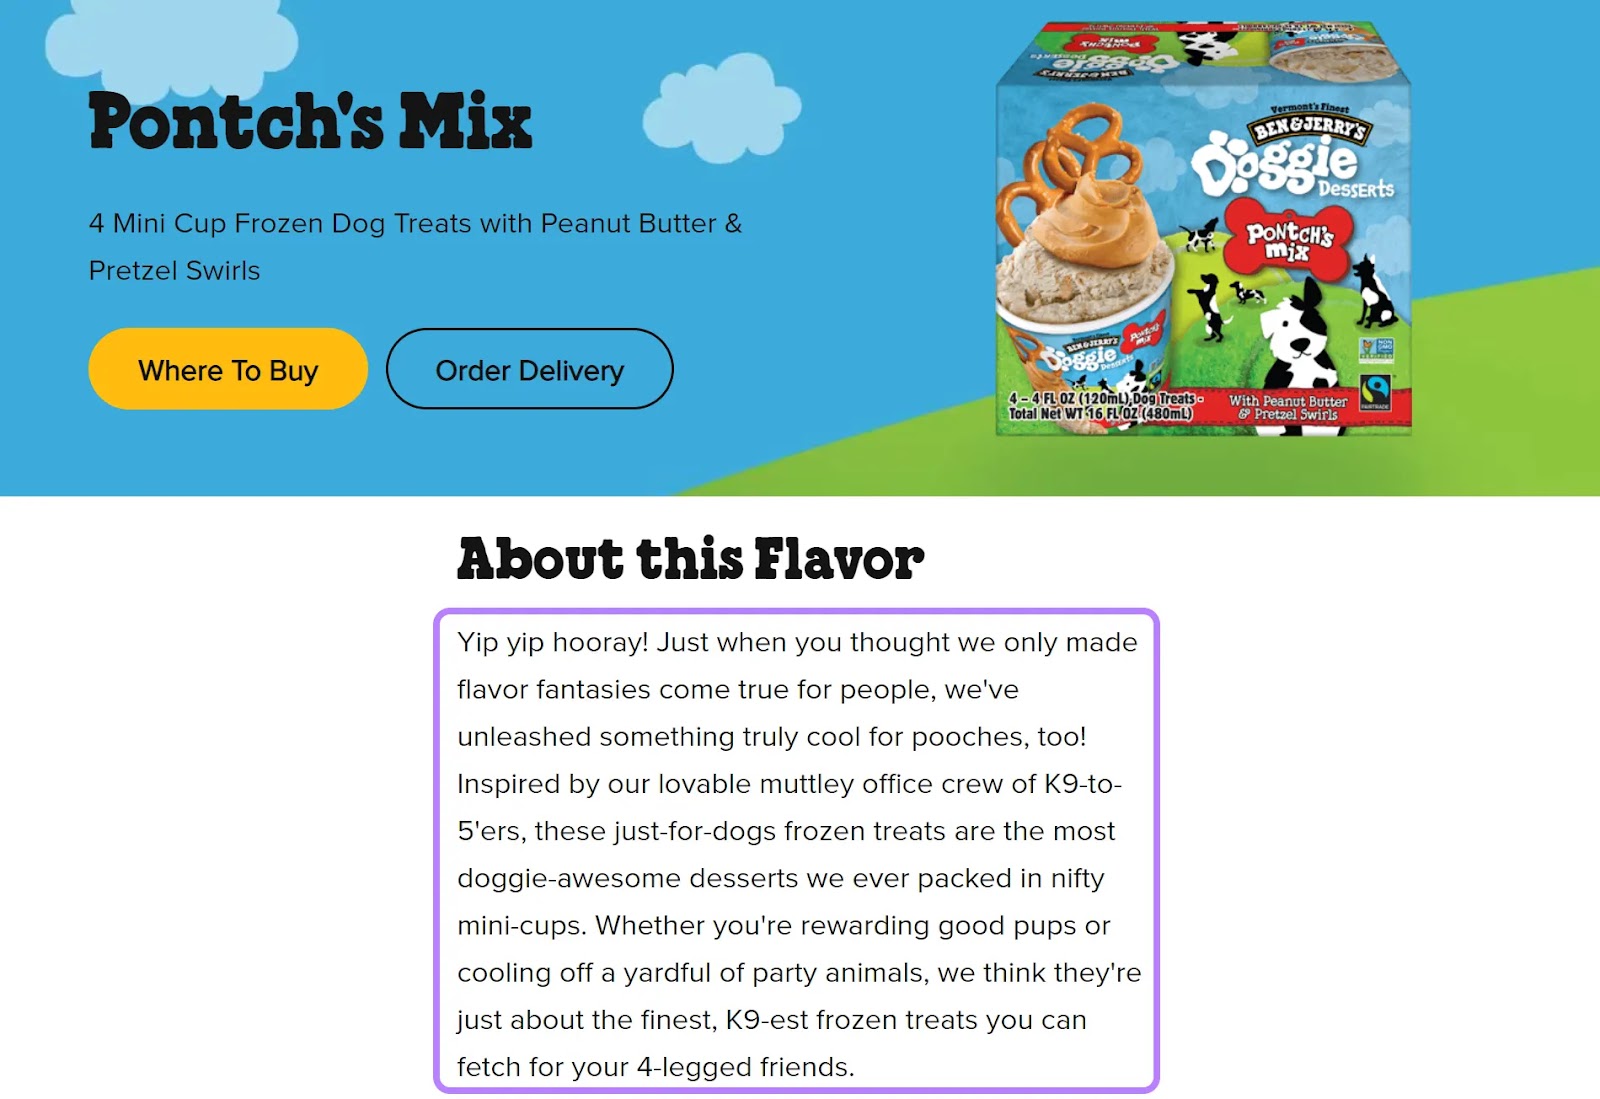 Ben & Jerry’s Pontch's Mix landing page